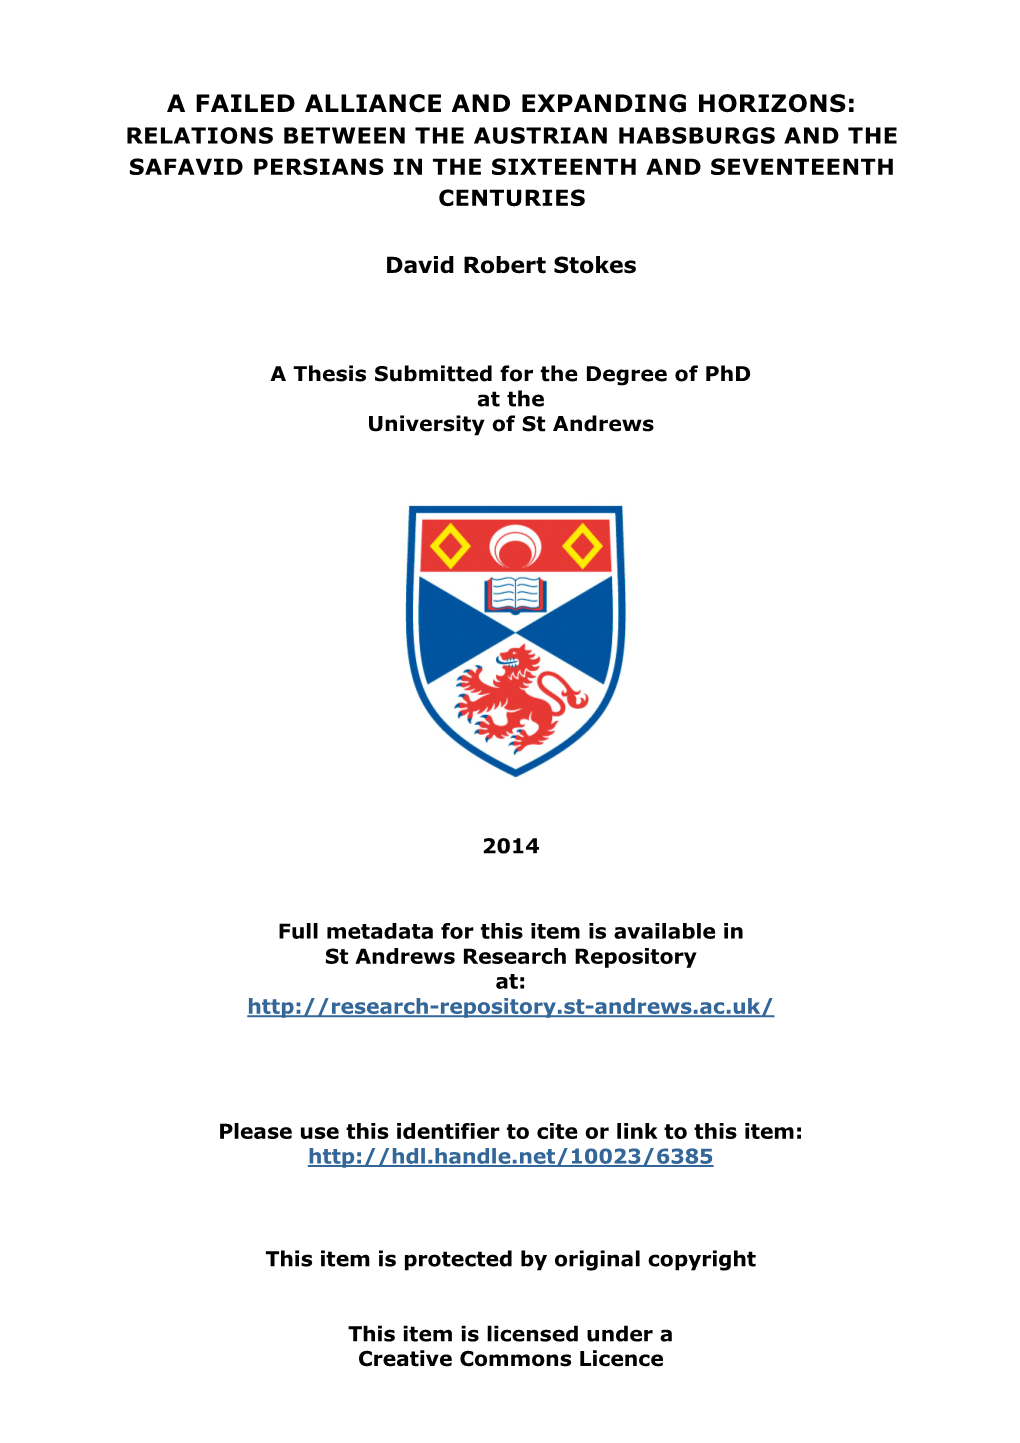 David Robert Stokes Phd Thesis